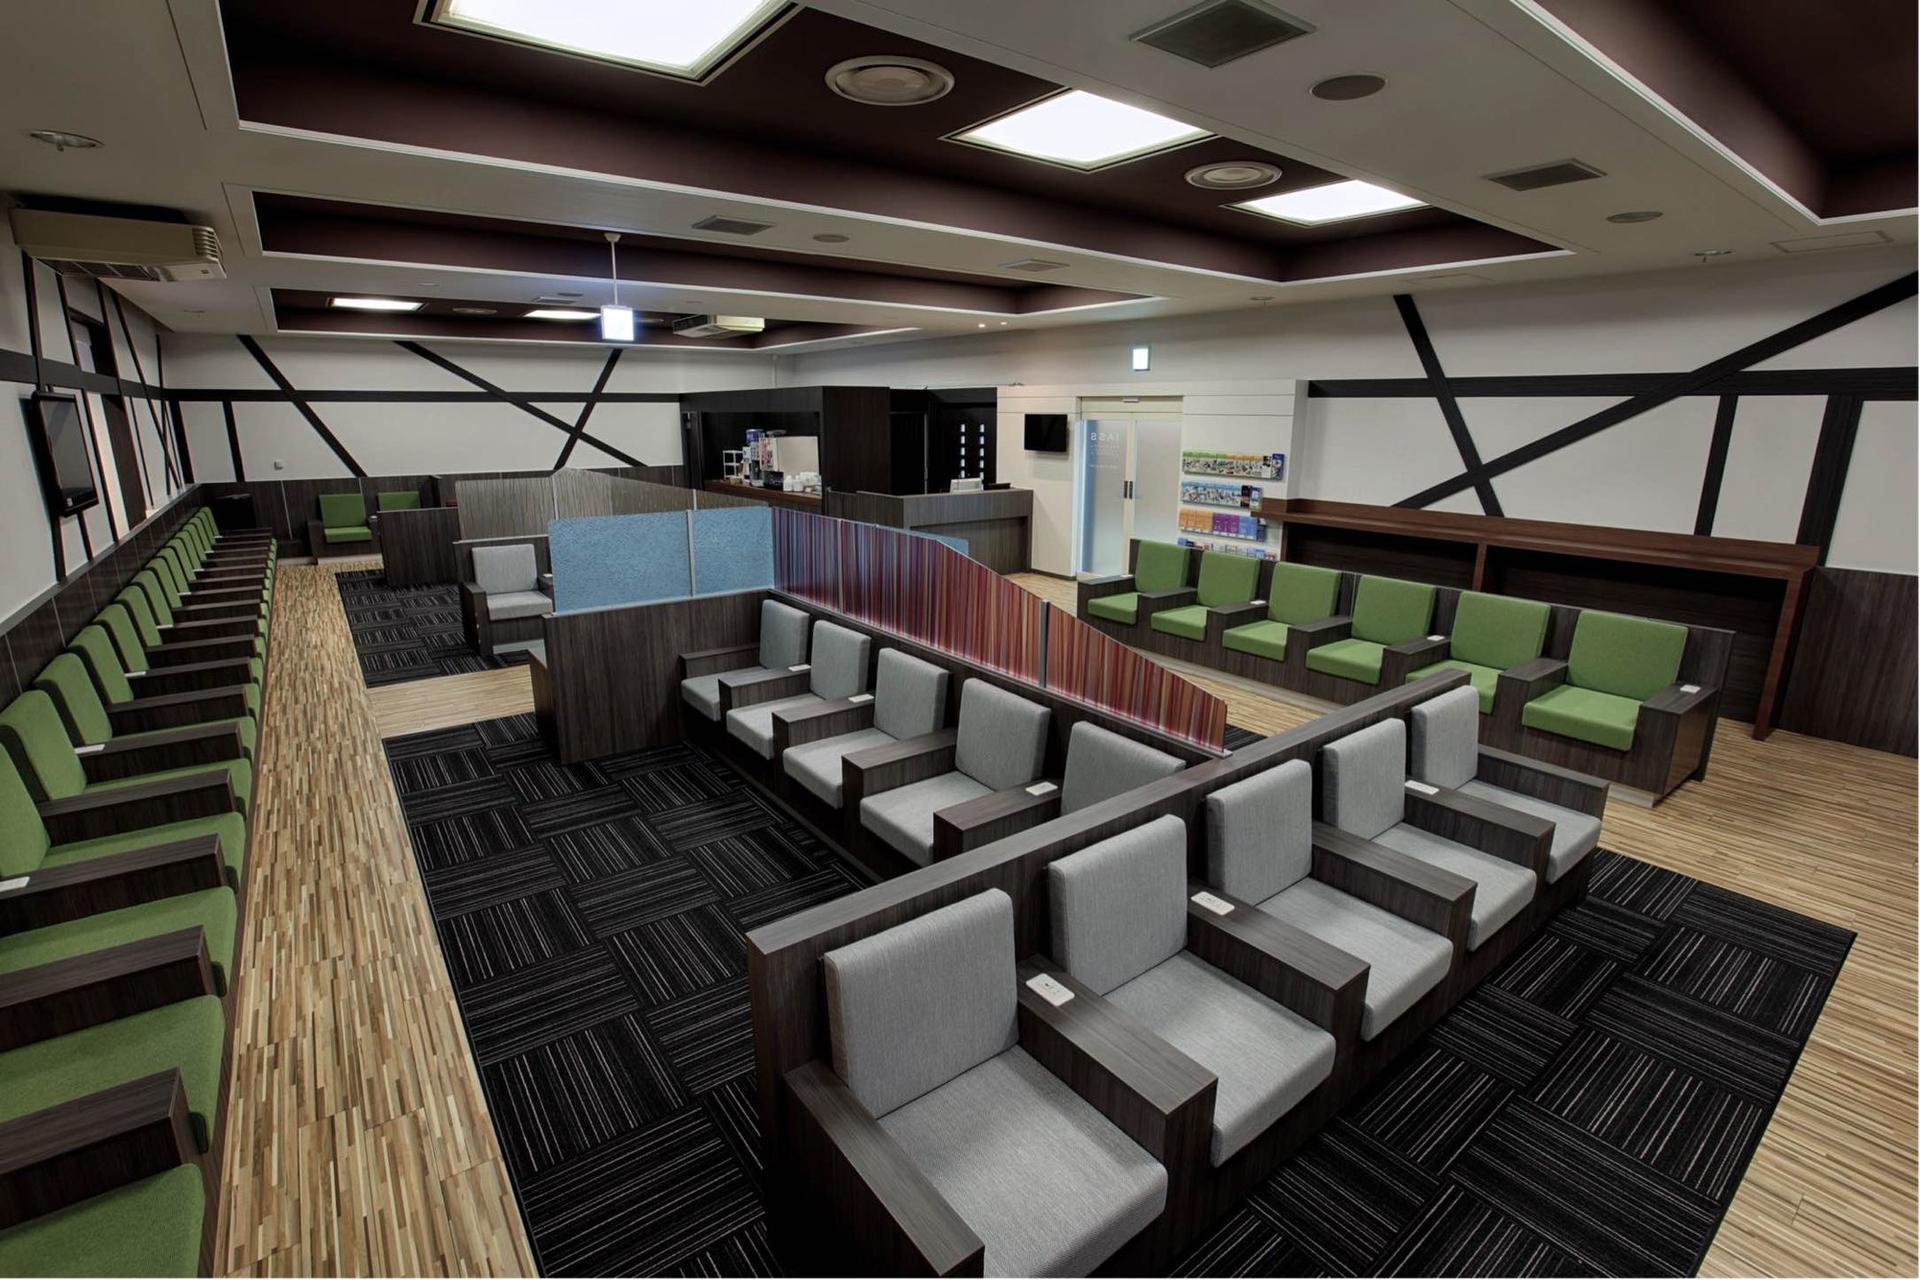 IASS Executive Lounge image 8 of 16